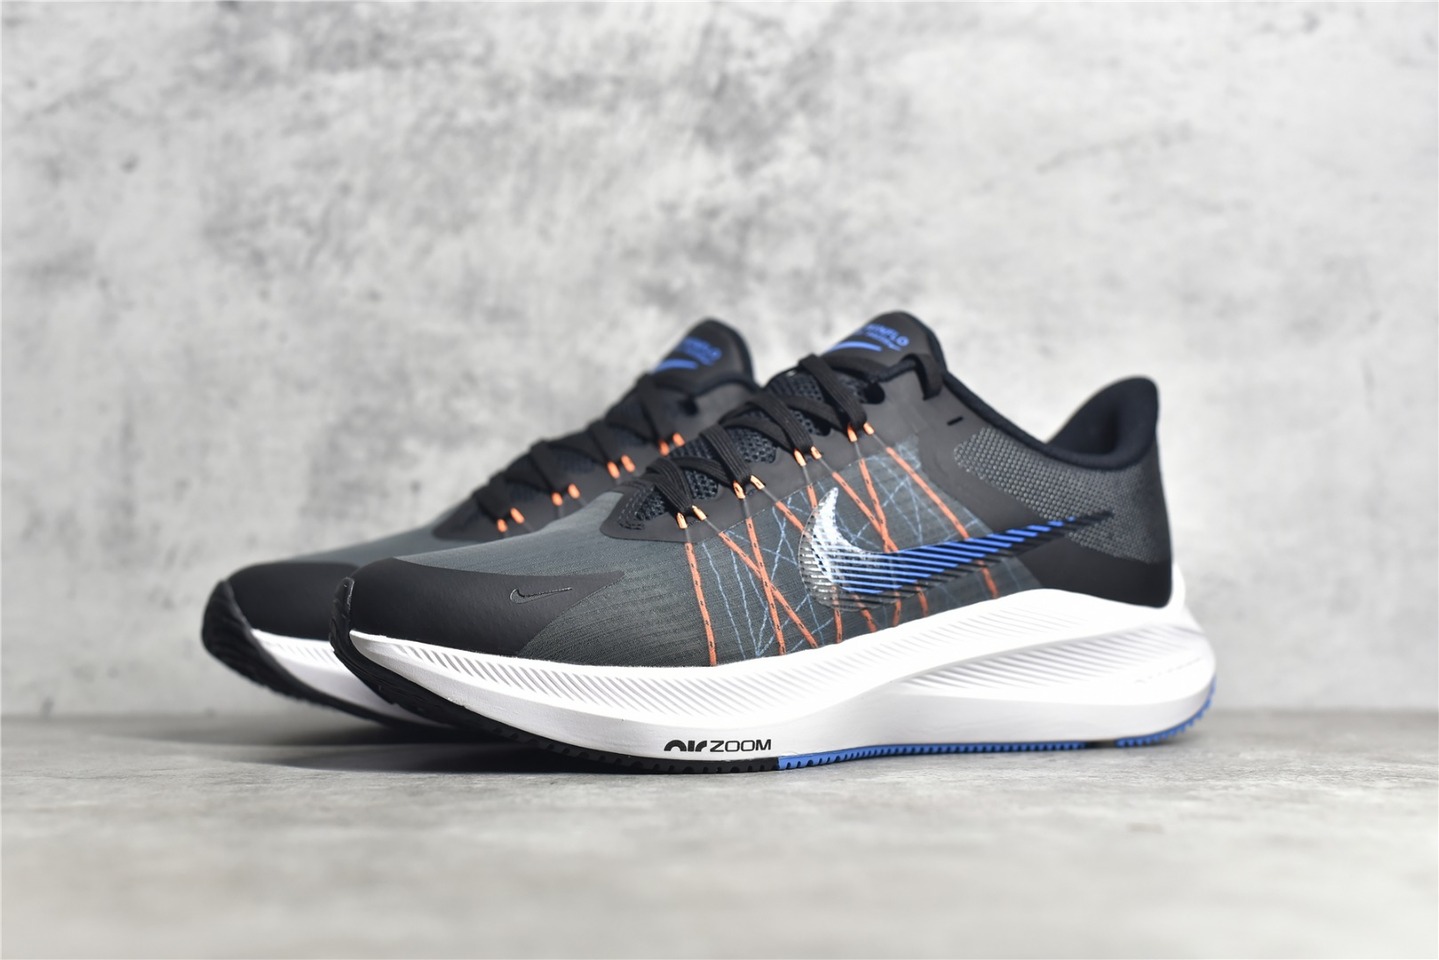 2021Fashion Nike Air Zoom Winflo 8 Marathon Running Shoes CW3419-007 side